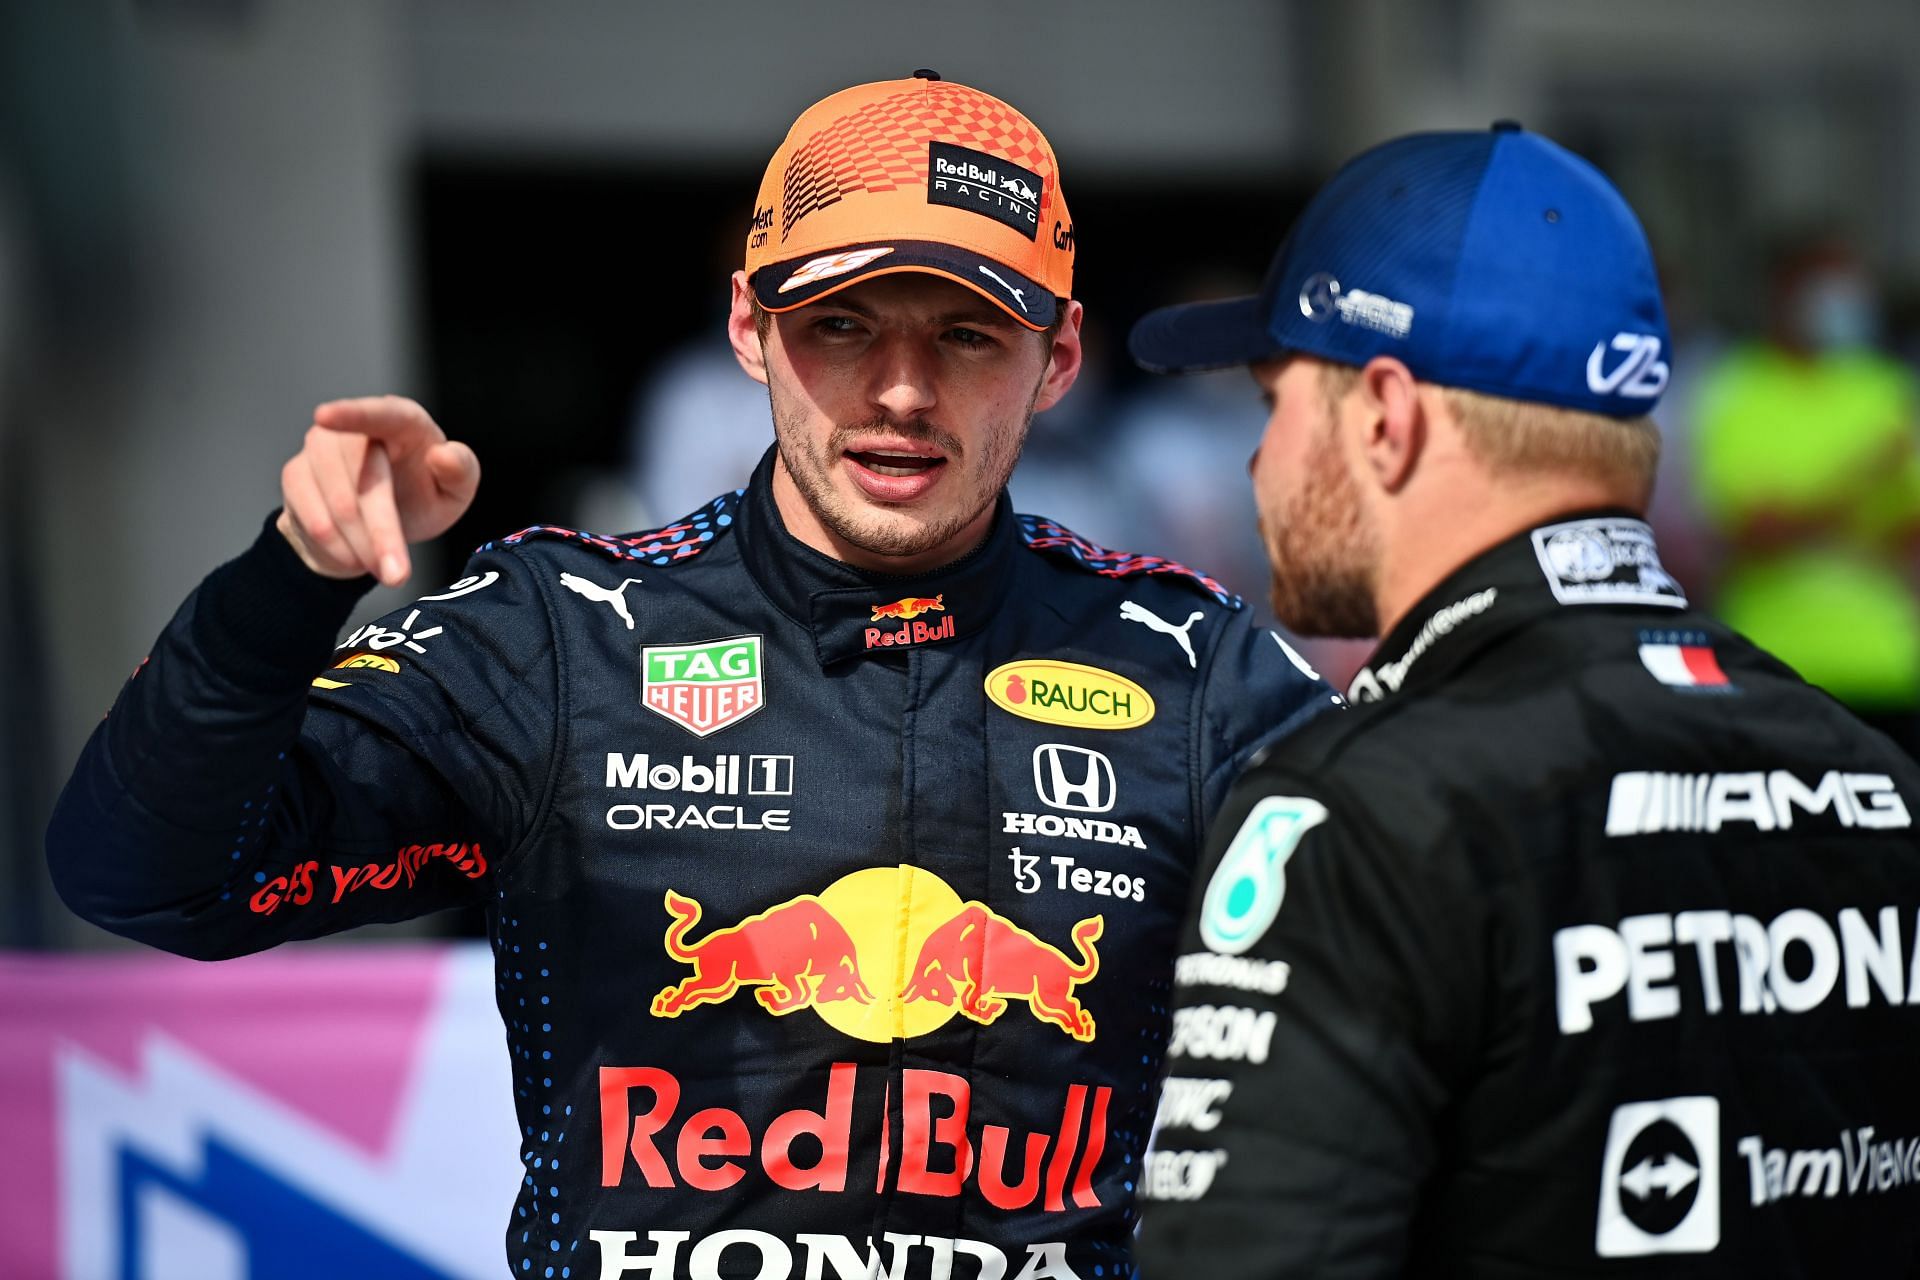 Max Verstappen and Valtteri Bottas face grid penalties for the Qatar Grand Prix race.